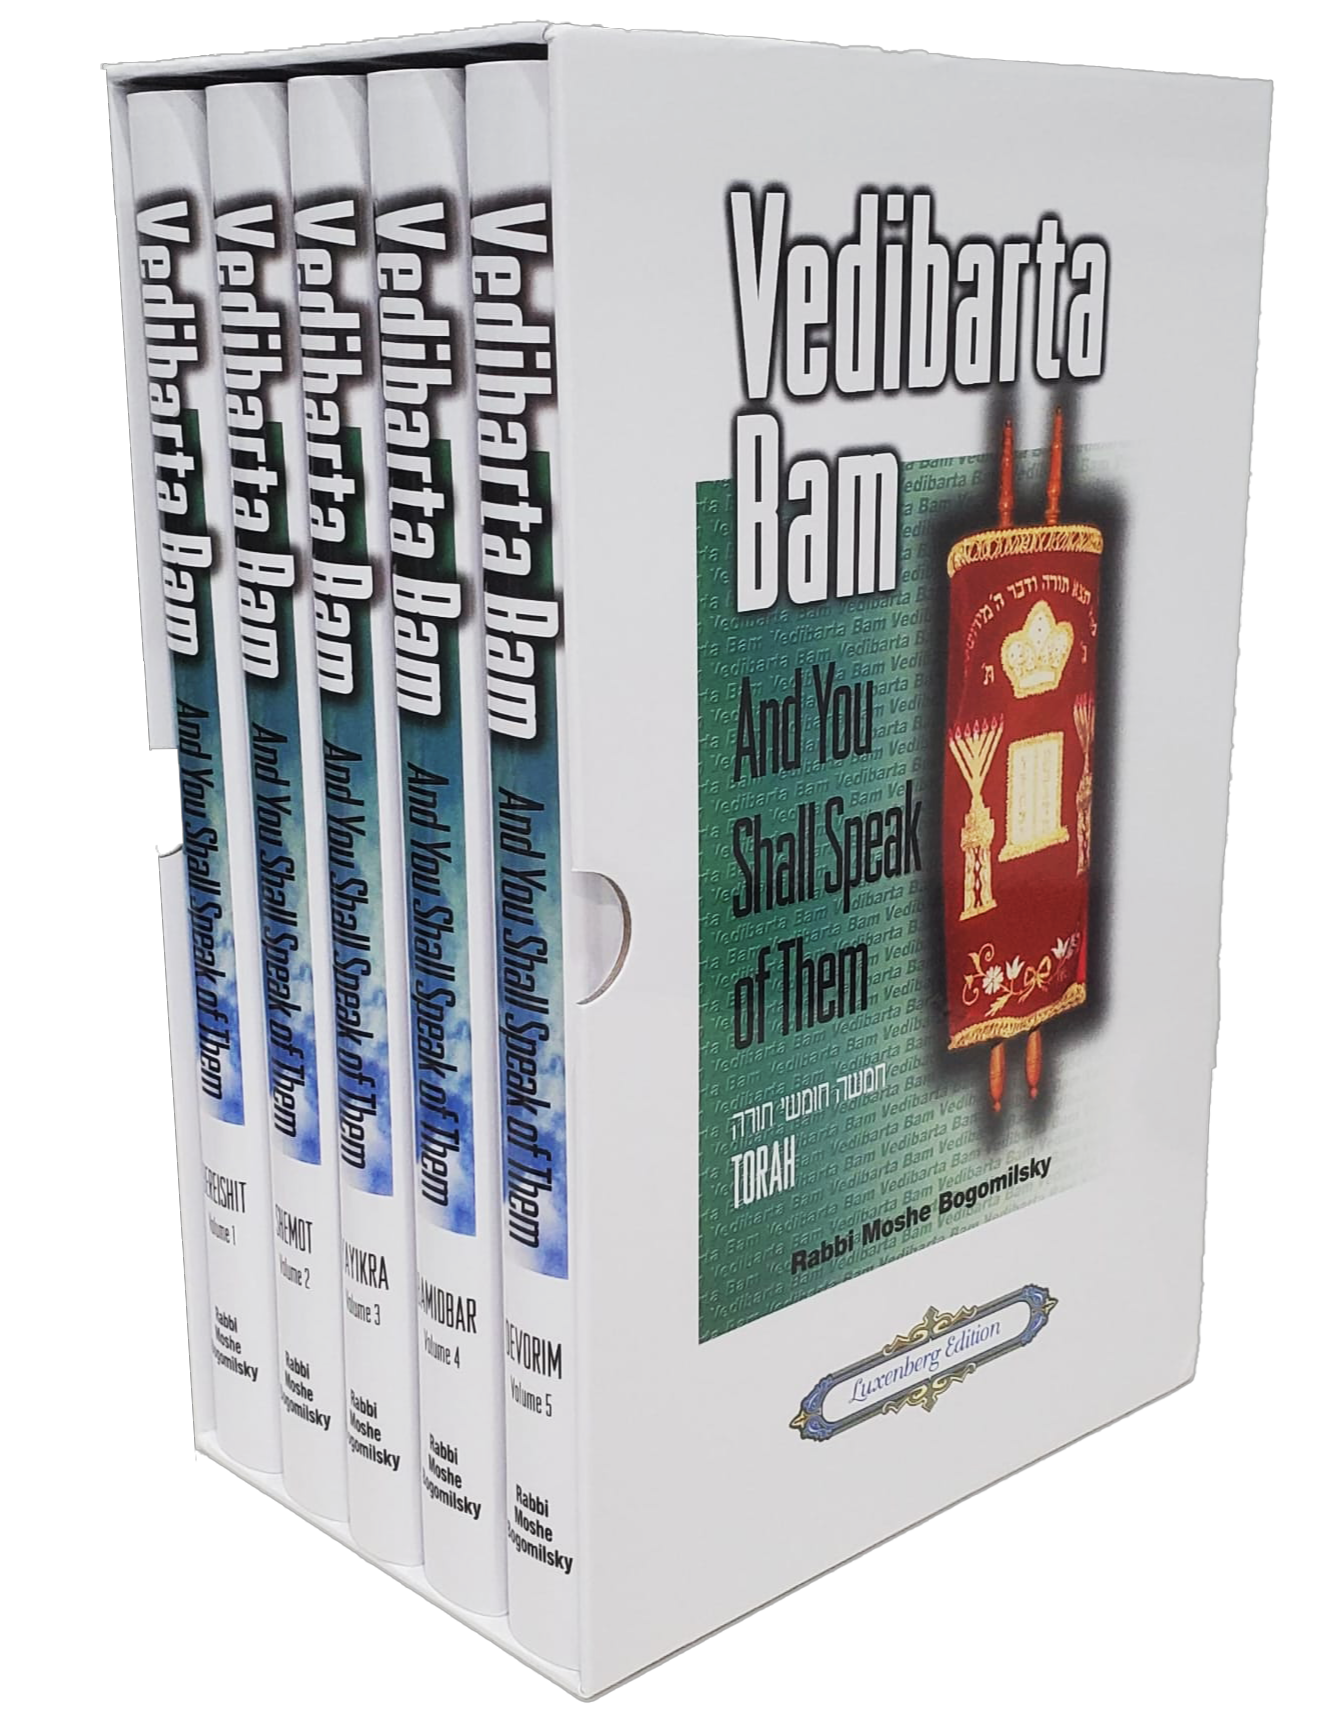 Vedibarta Bam—And You Shall Speak of Them: Chumash set (5 Vol)